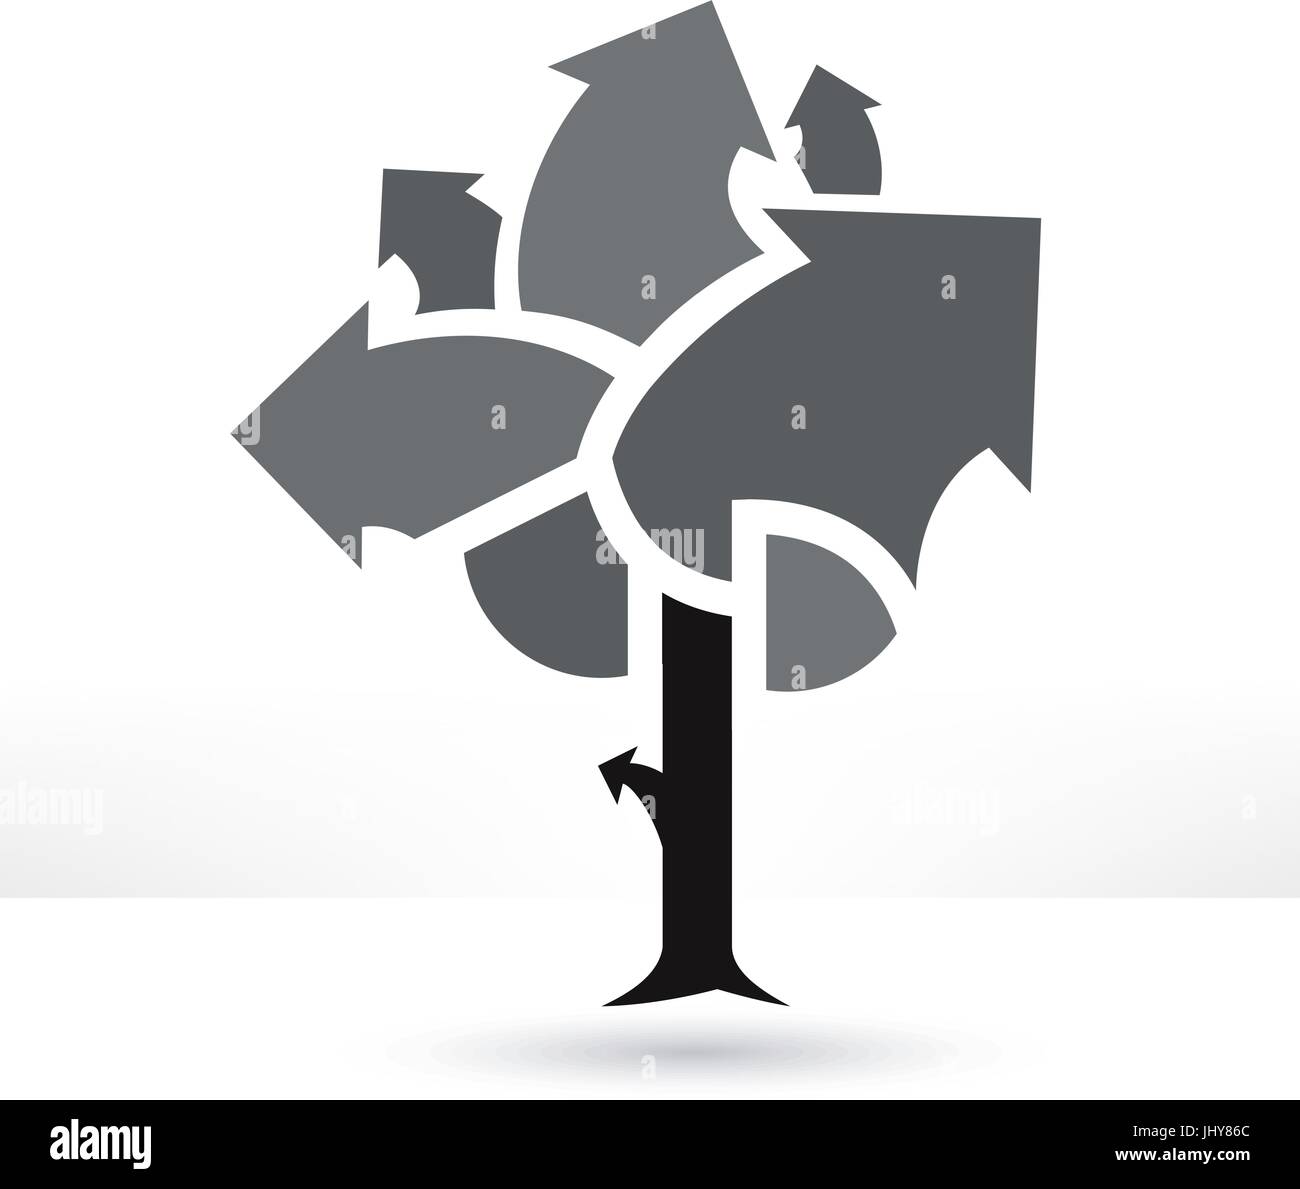 Business tree illustration Stock Vector